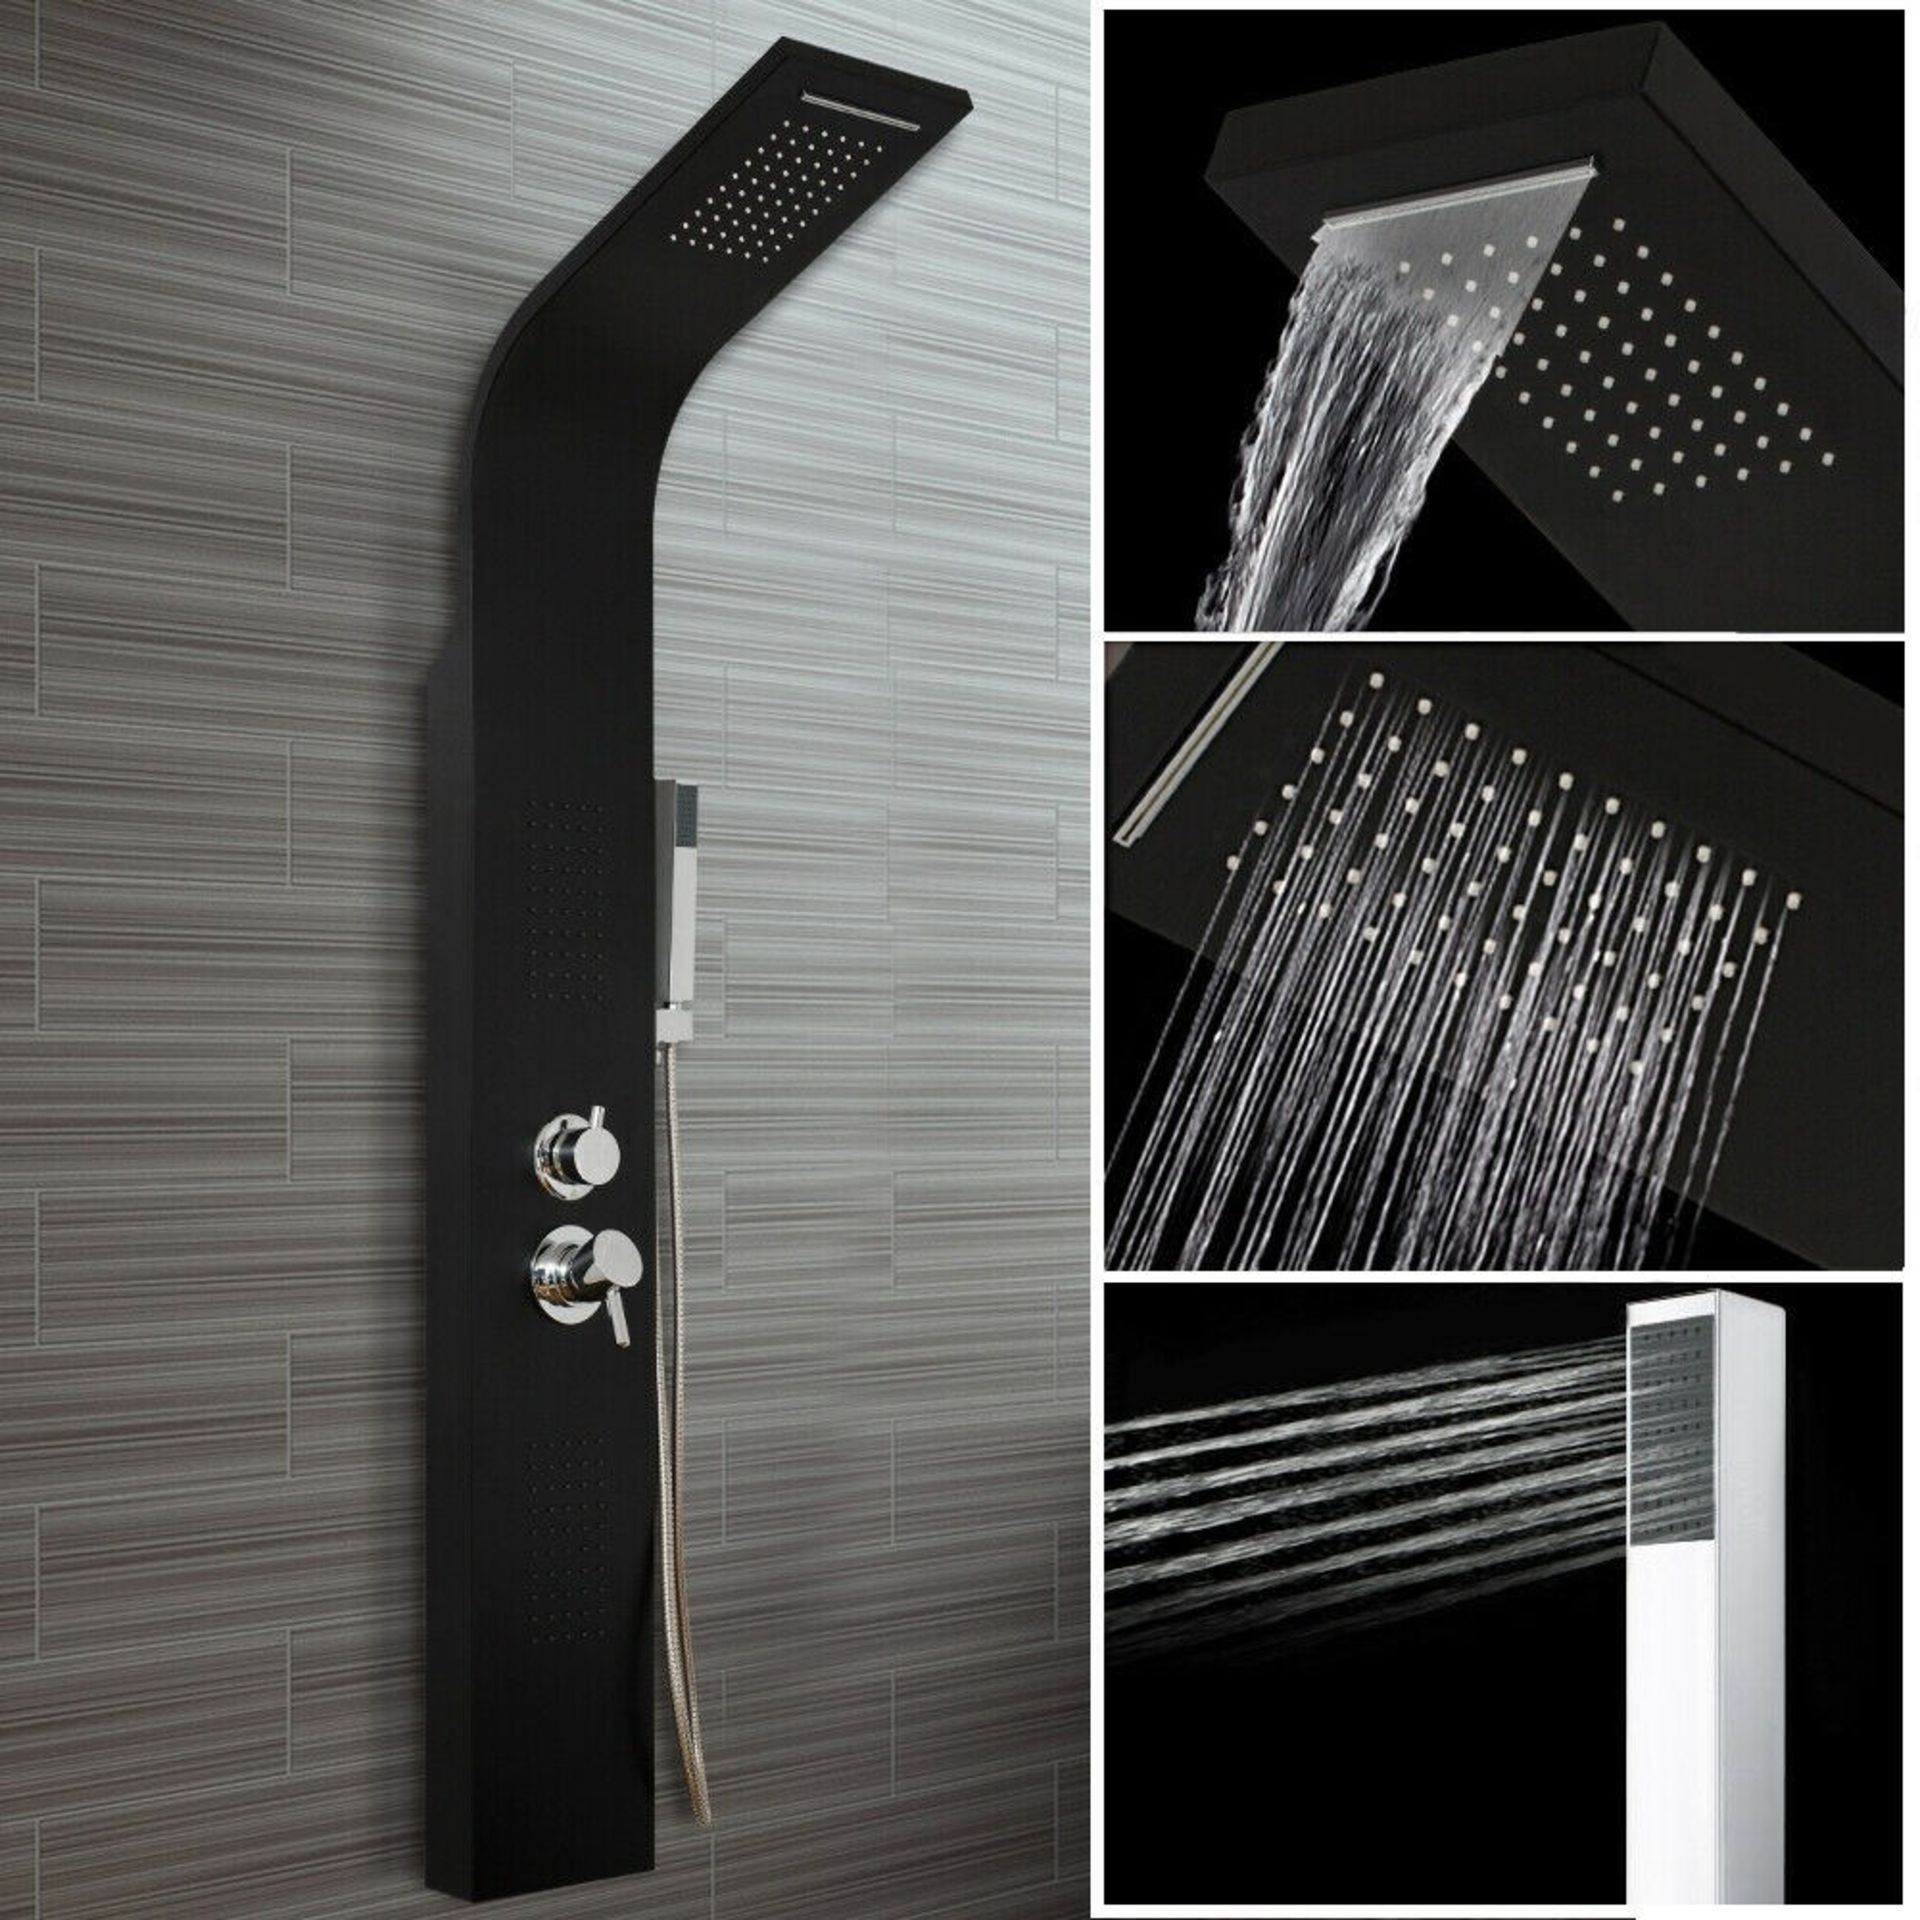 (W9) Modern Black Column Bathroom Waterfall Mixer Shower Panel With Body Jet. This Black Showe...